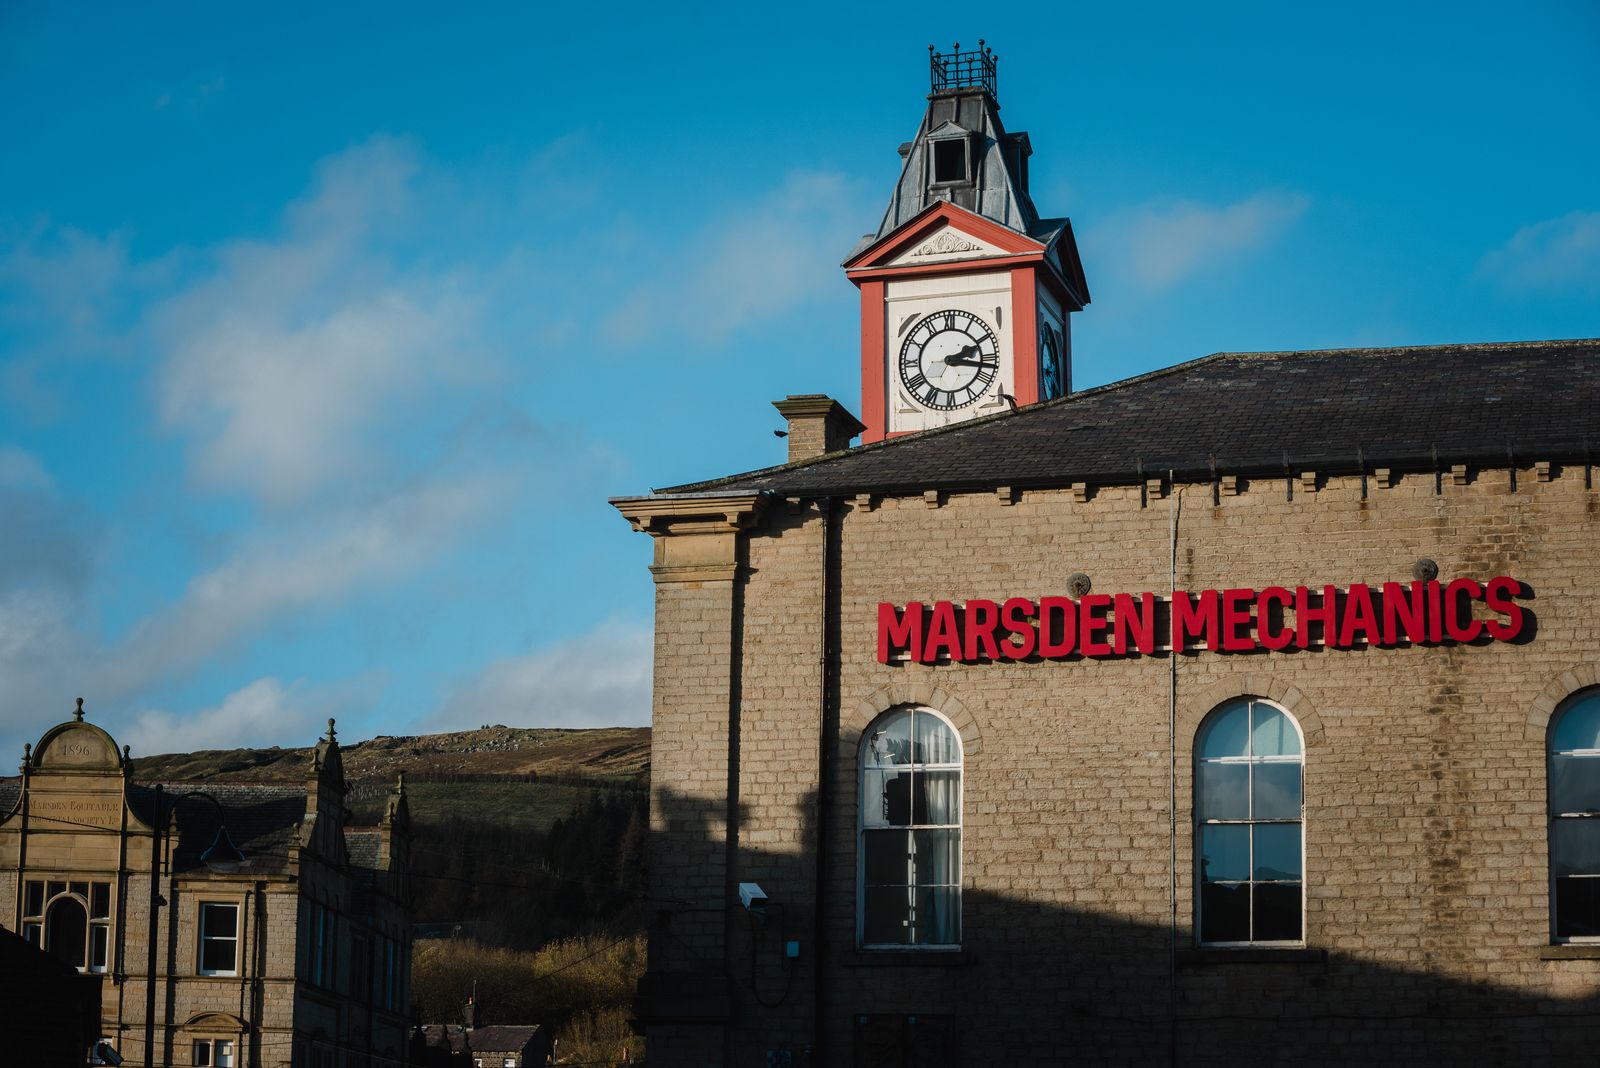 Re-opening of iconic Marsden Community Hub